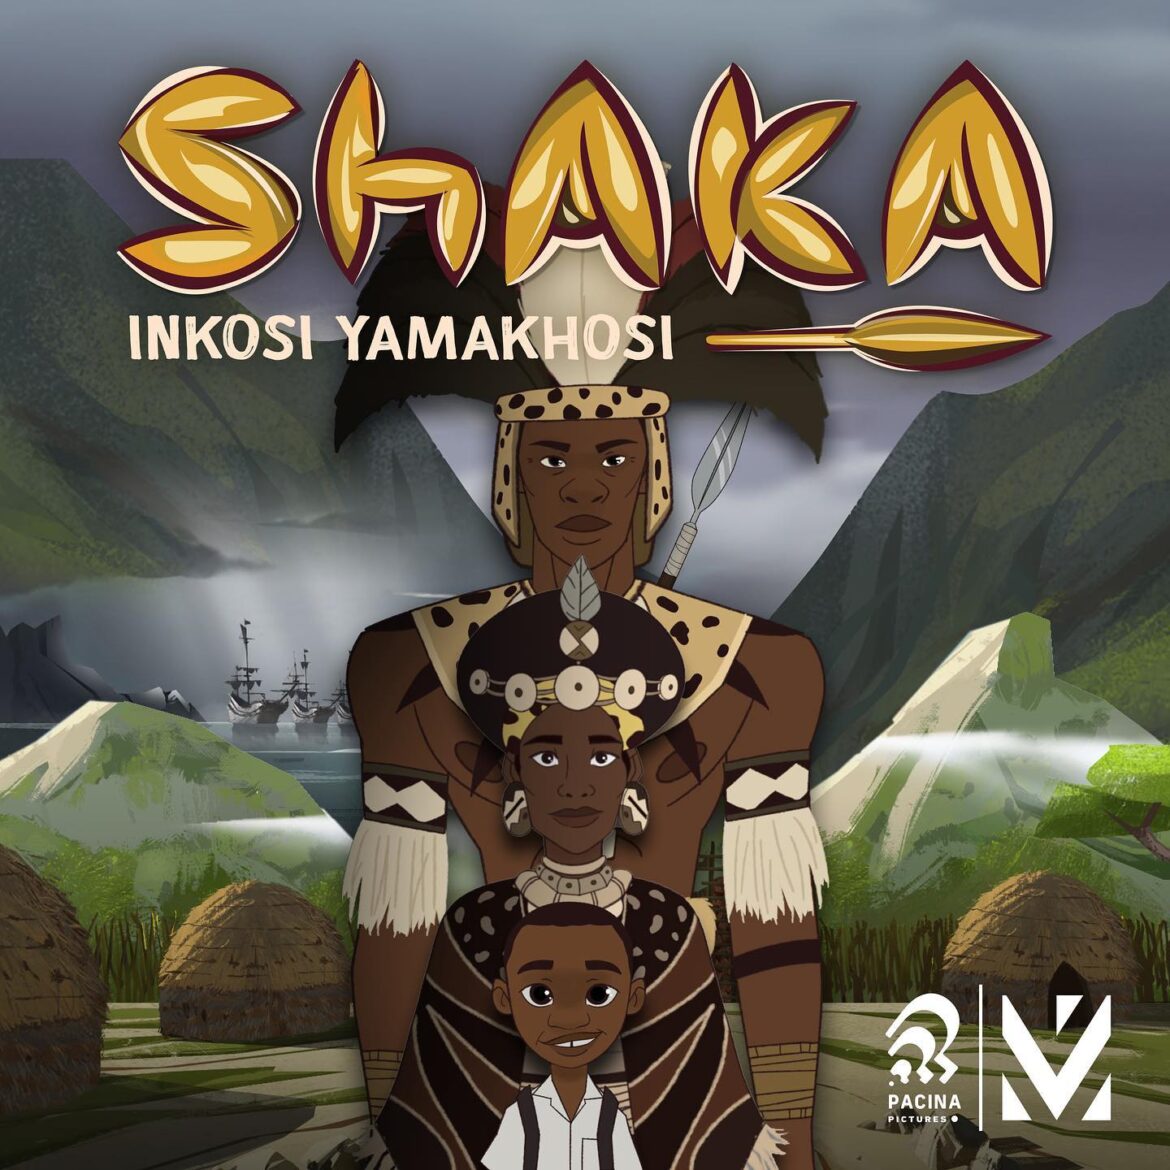 Shaka Zulu reimagined in a short animation film